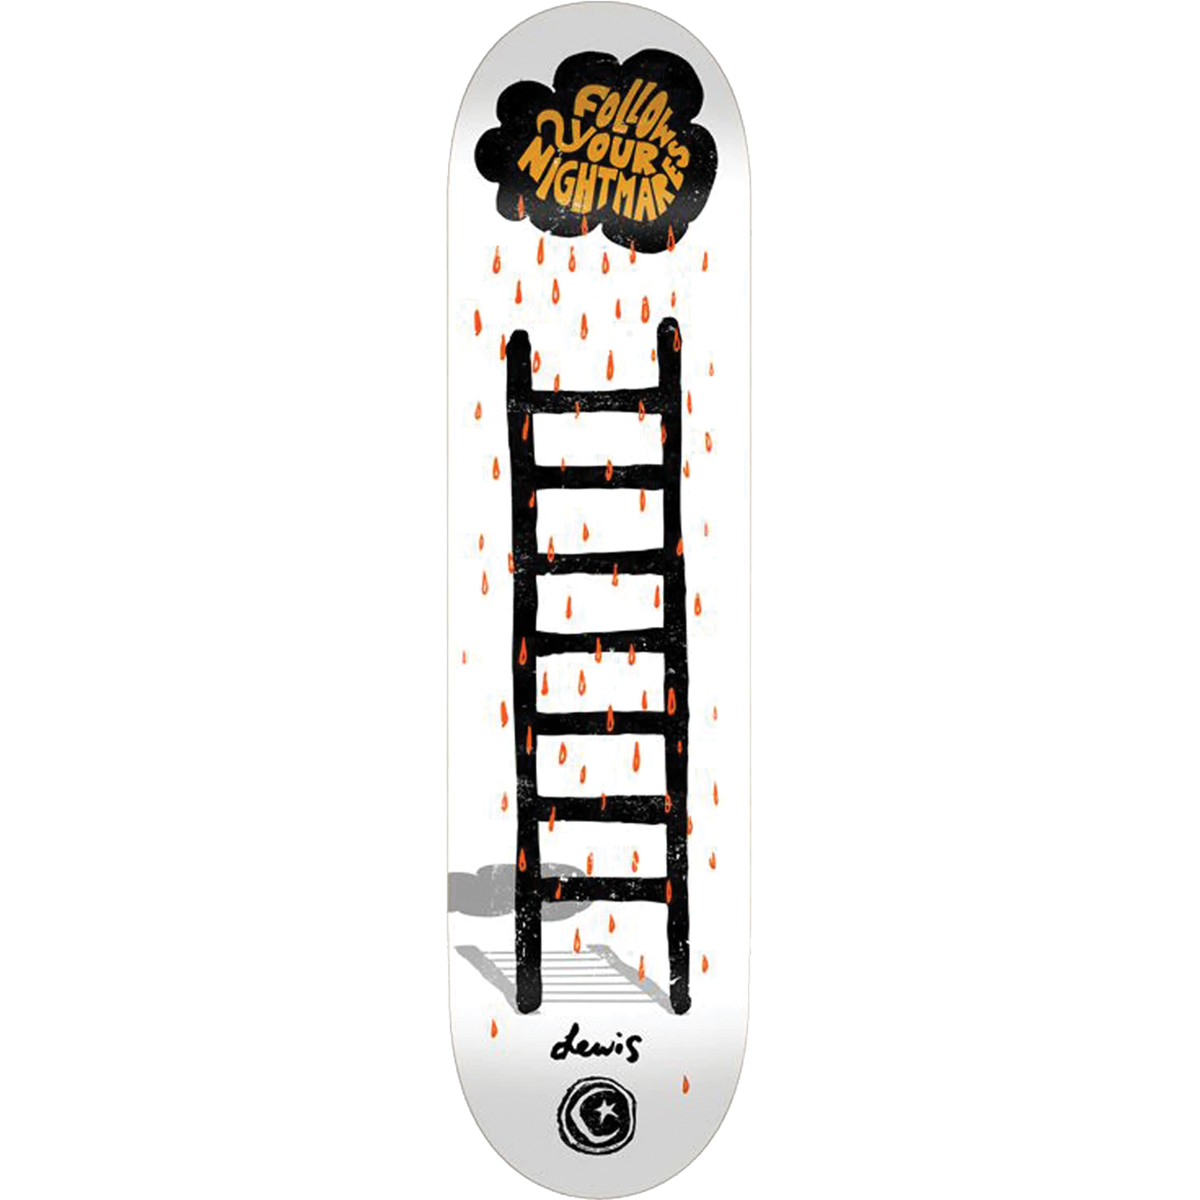 Foundation Lewis Nightmares Skateboard Deck -8.25 DECK ONLY